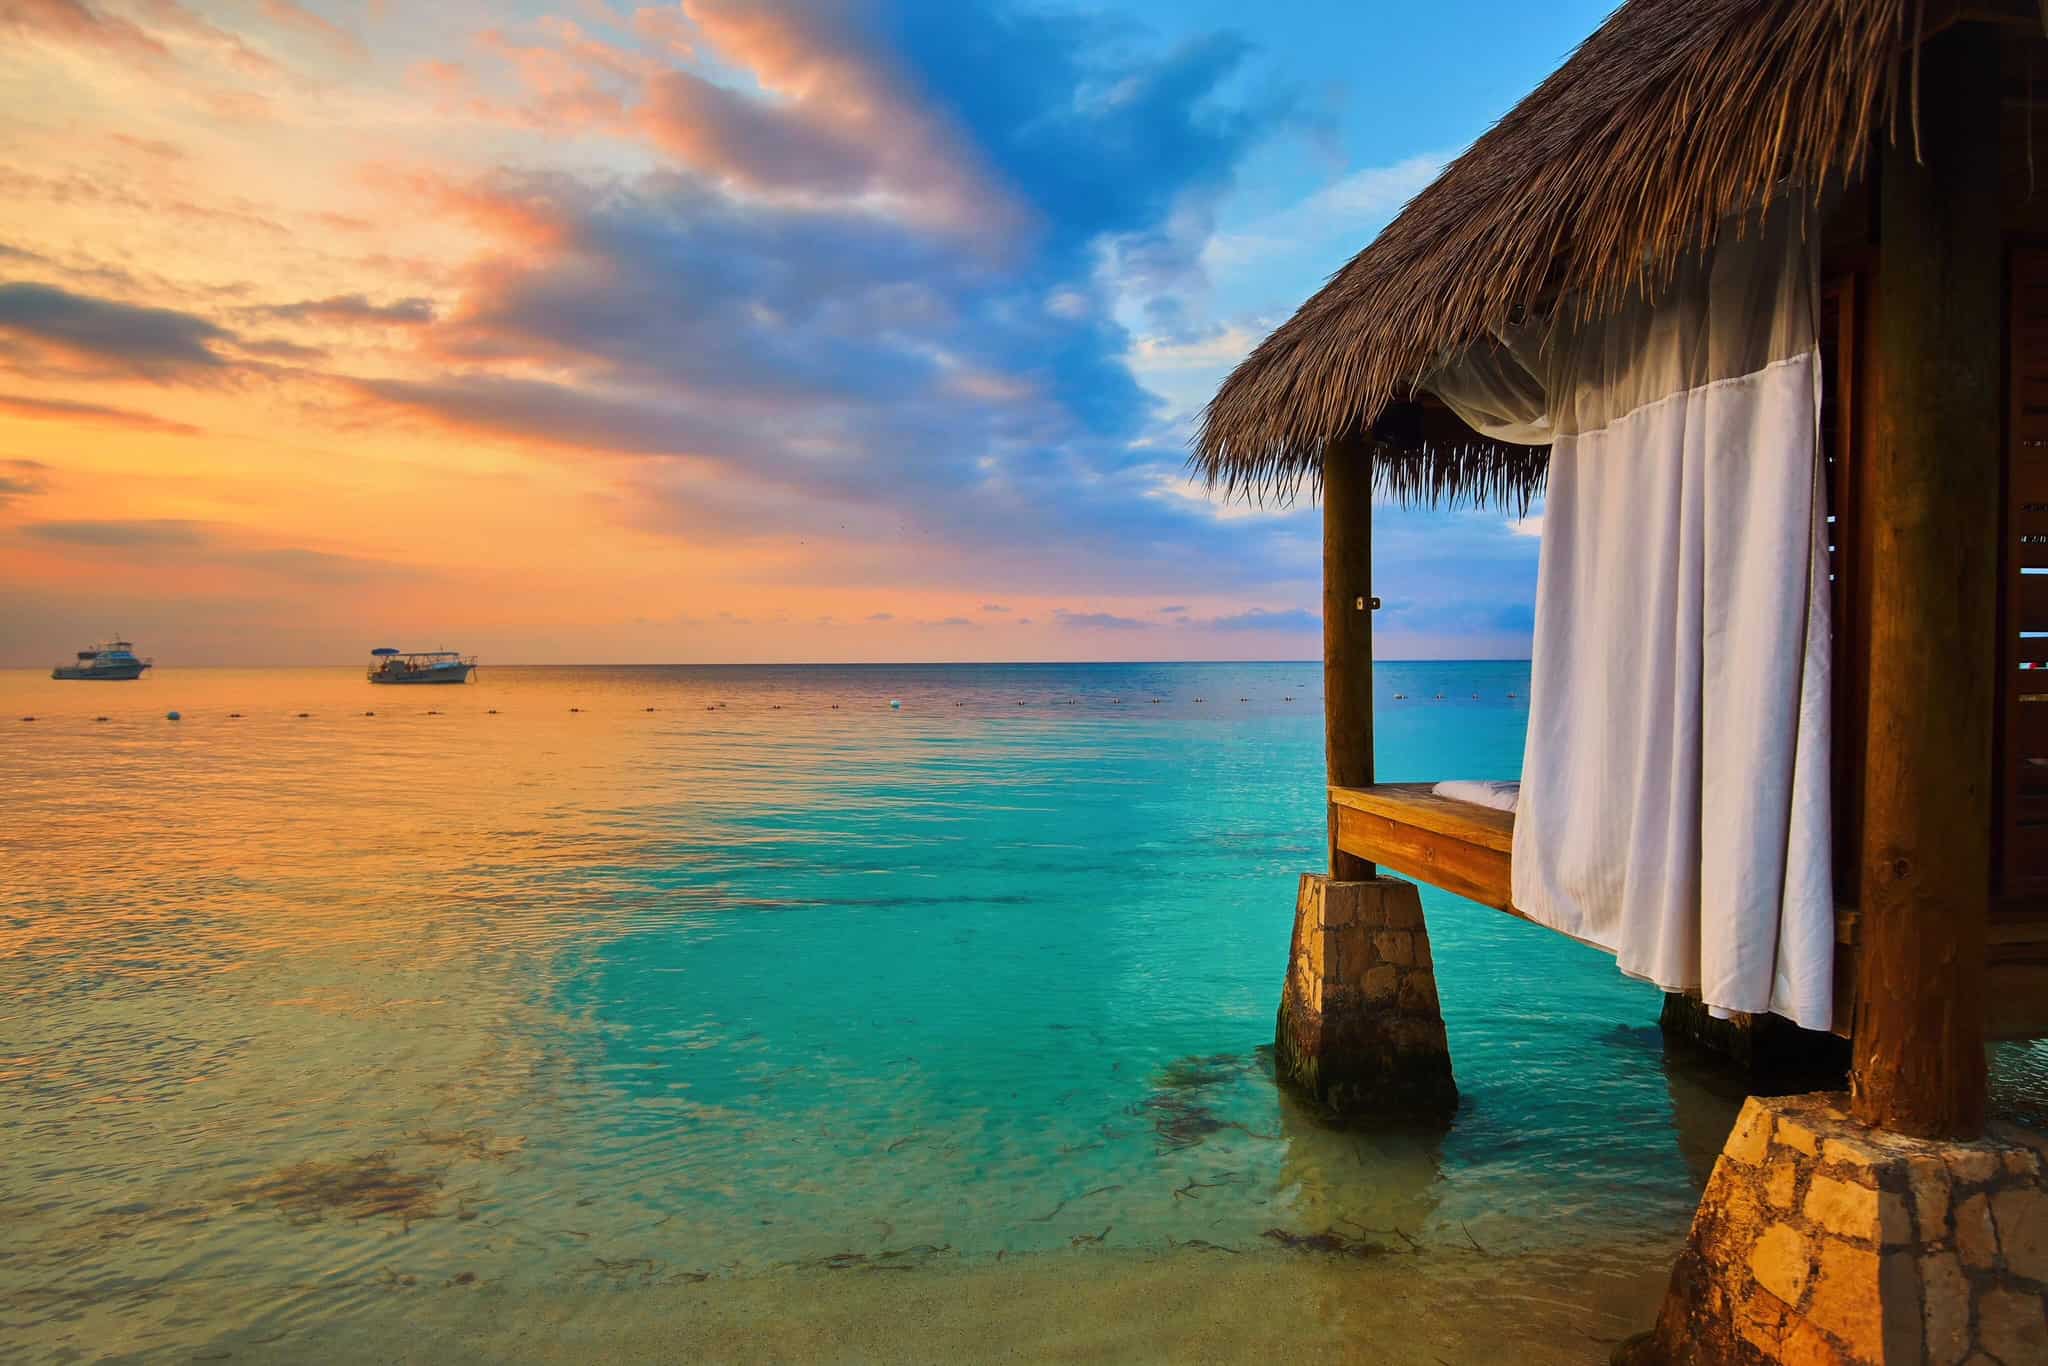 Sunset over Montego Bay Jamaica at Sandals Resorts